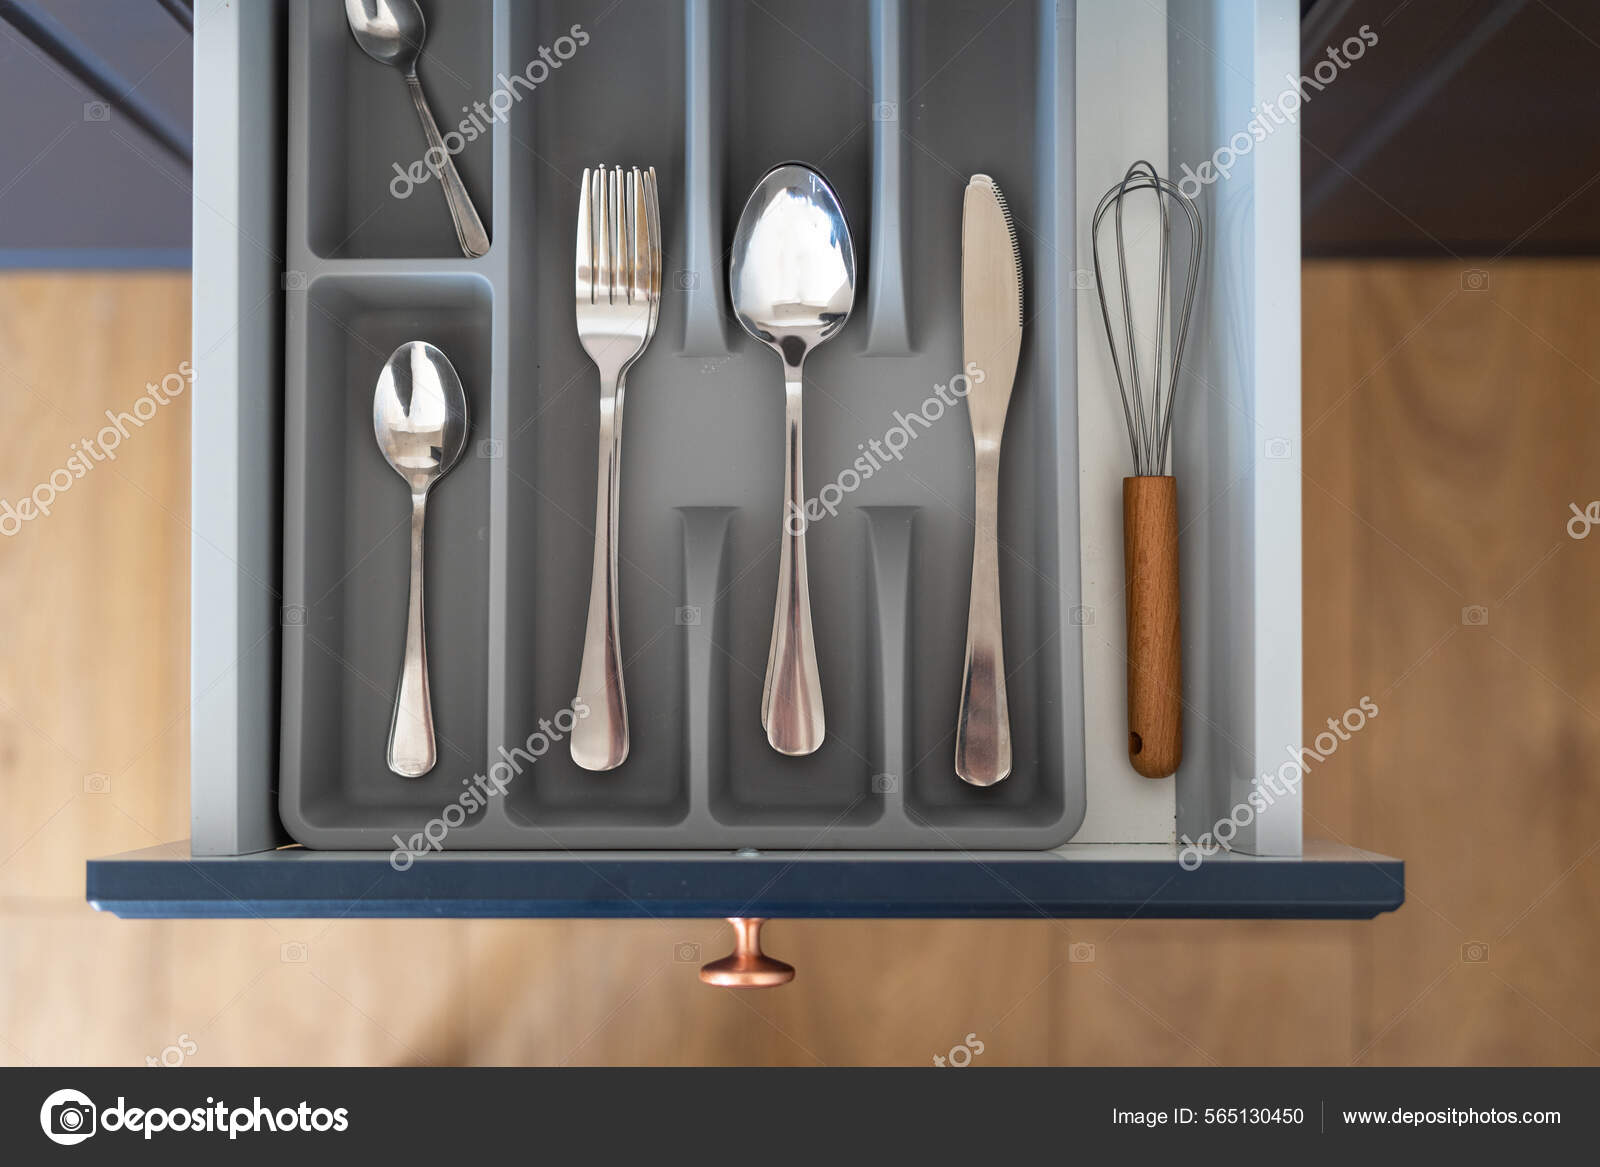 https://st.depositphotos.com/5339154/56513/i/1600/depositphotos_565130450-stock-photo-kitchen-drawer-cutlery-set-flat.jpg